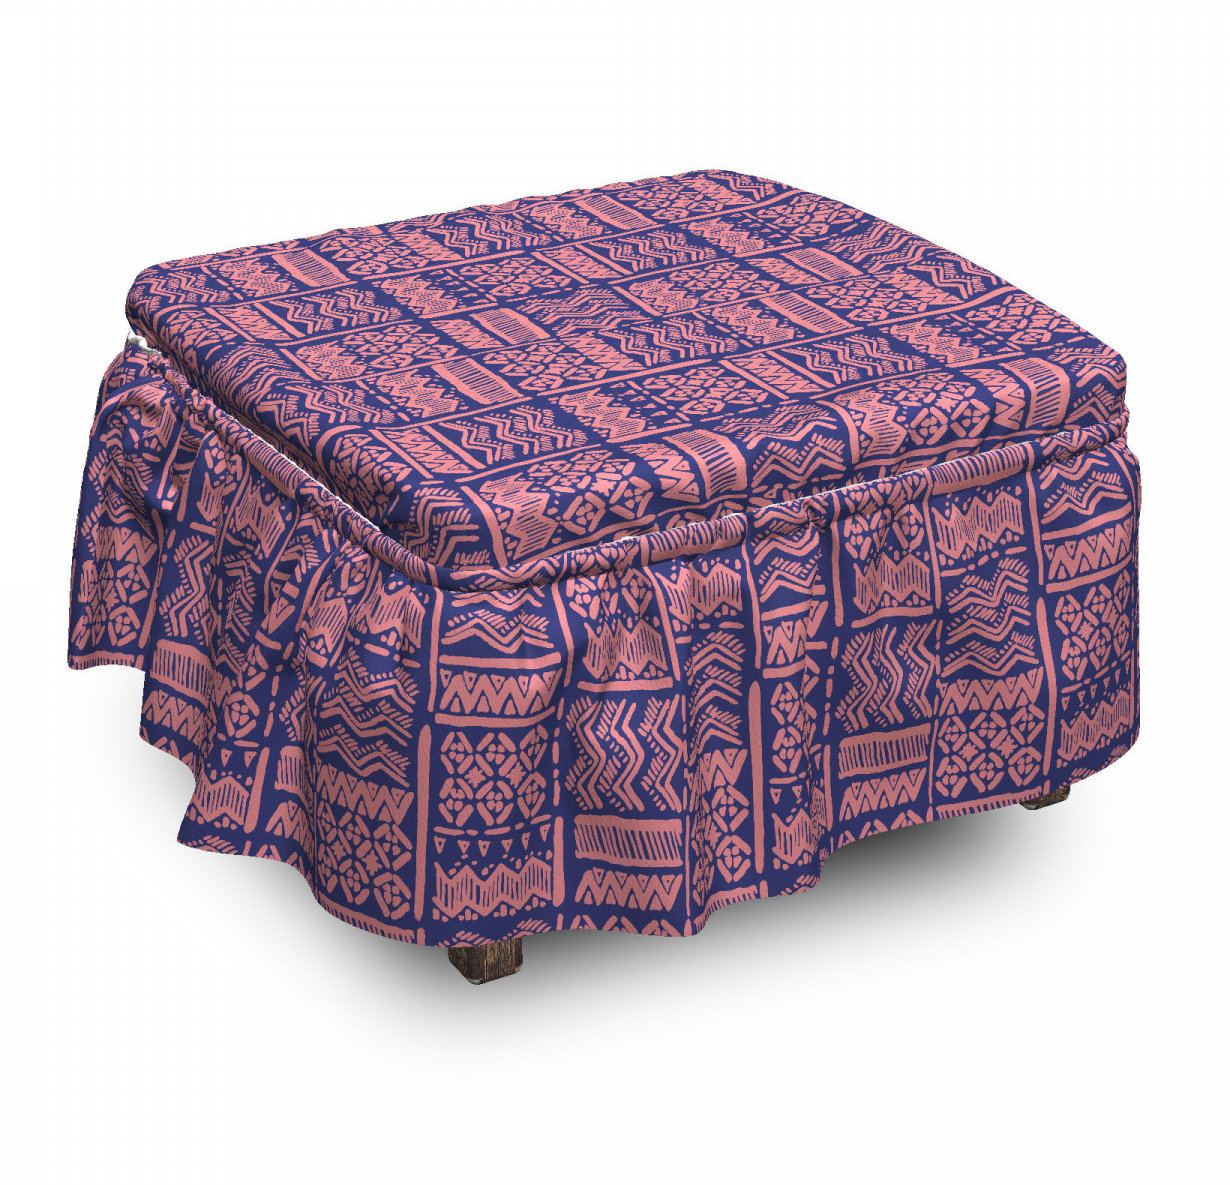 Bless international Box Cushion Ottoman Slipcover